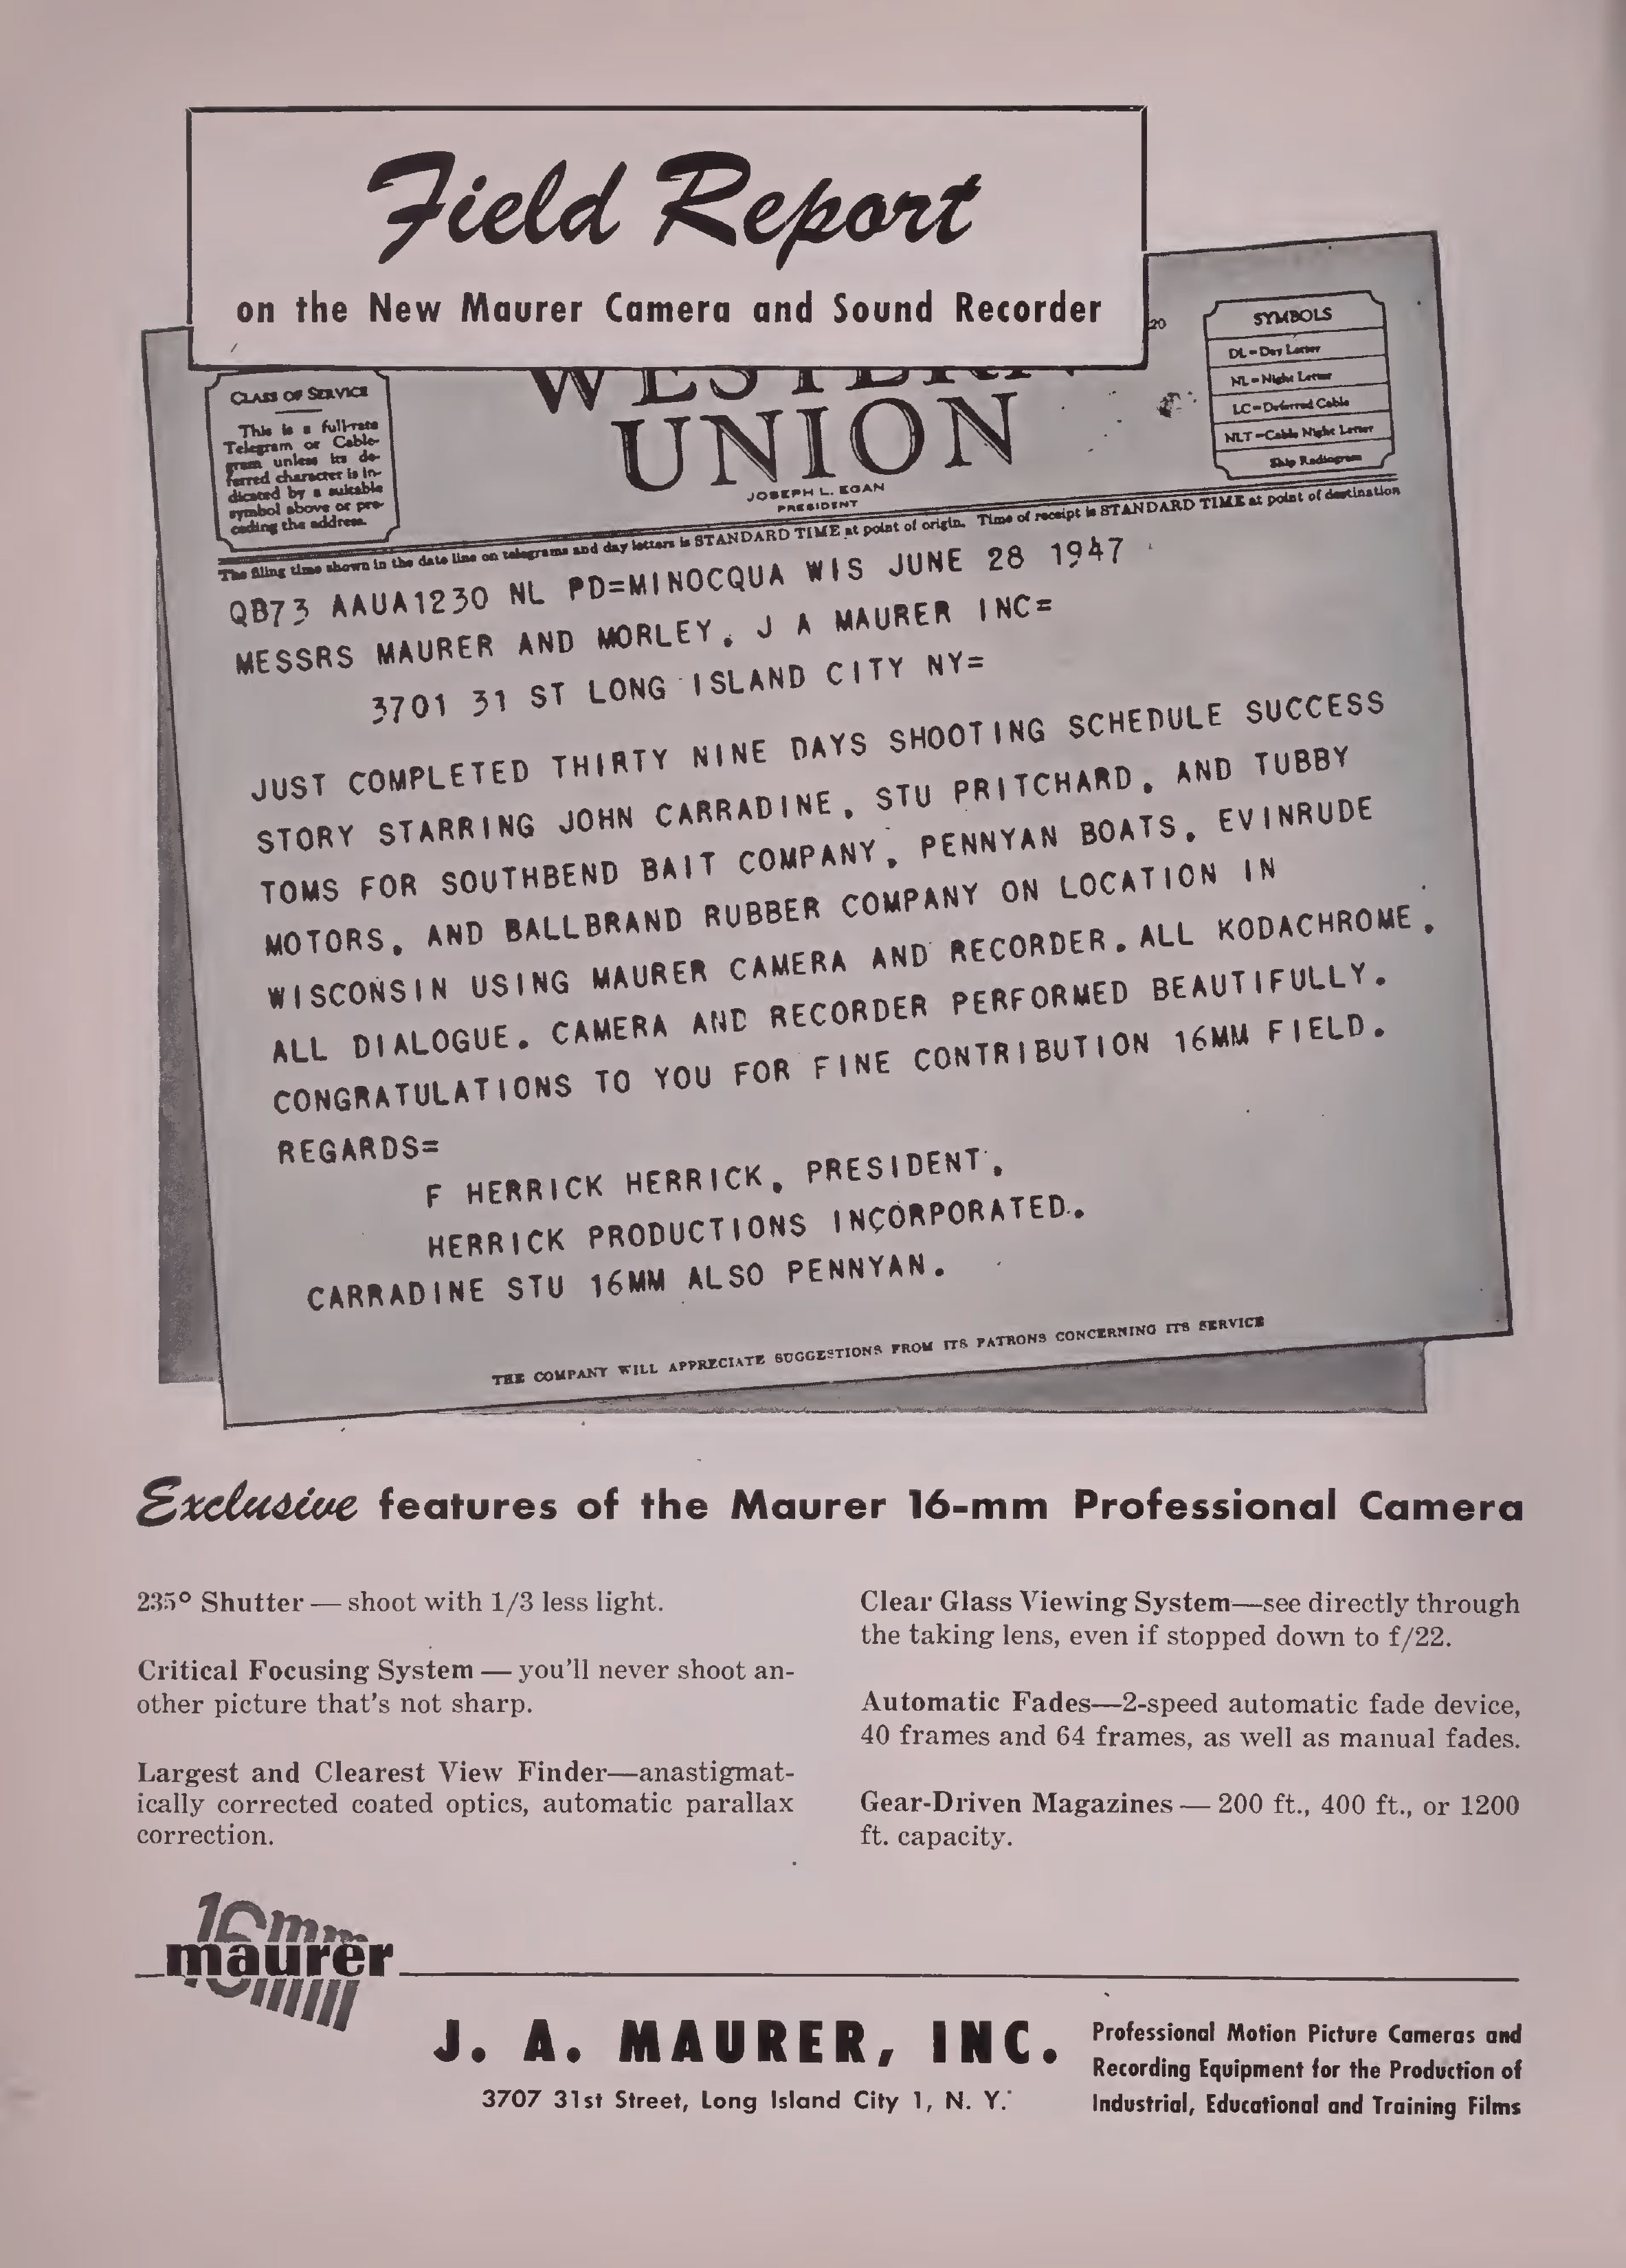 Maurer Professional 16mm Camera Model 05 camera advertisement from American Cinematographer magazine in September 1947